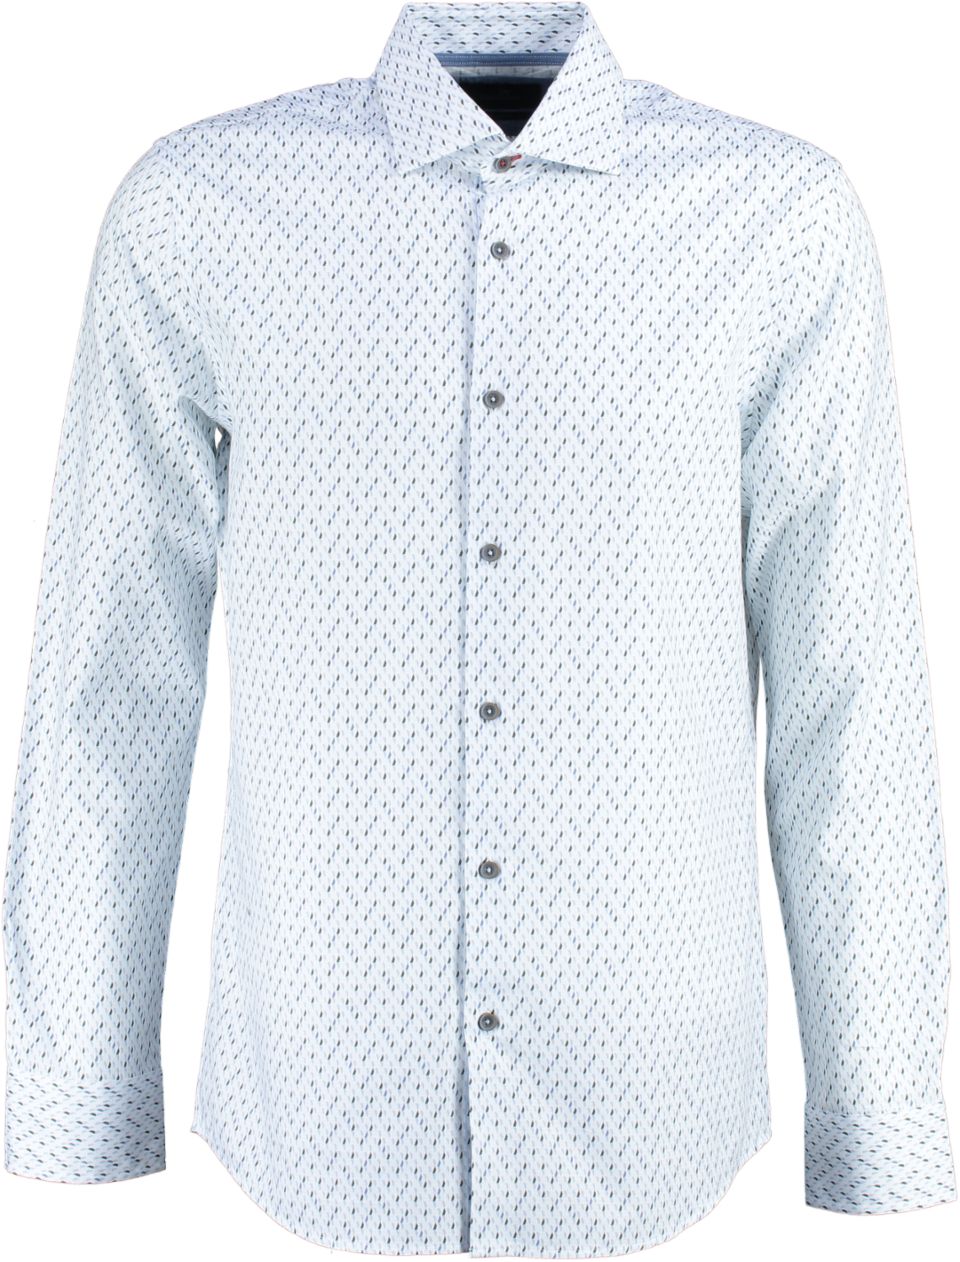 VanGuard Casual Shirt Long Sleeve Shirt 